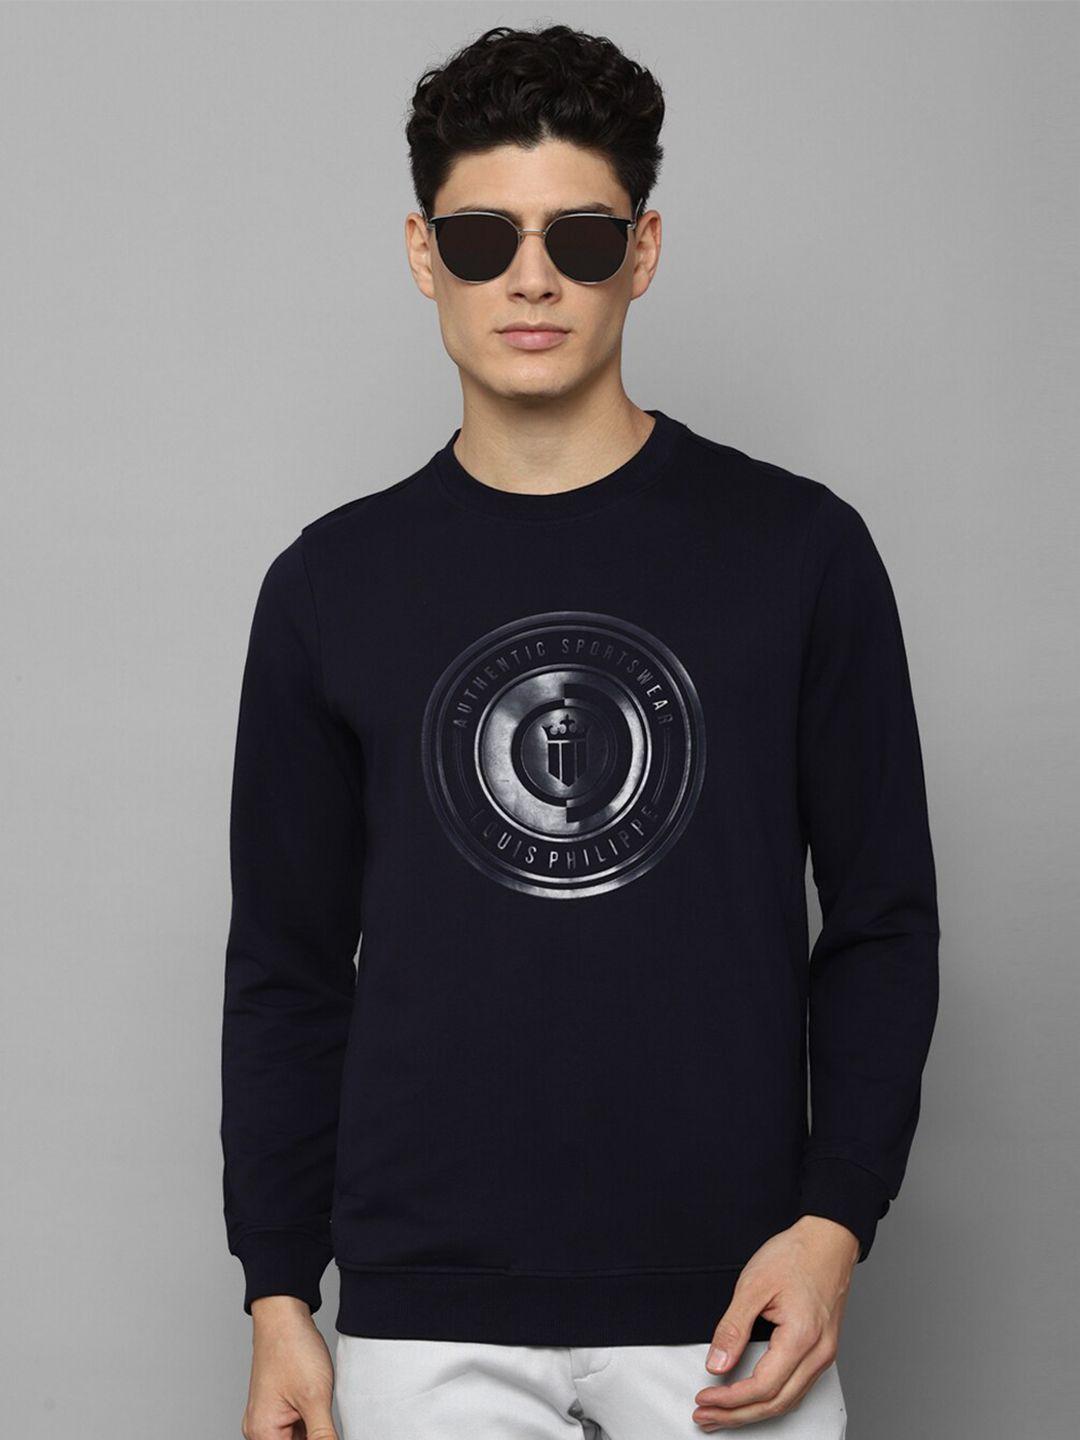 louis philippe sport men navy blue printed cotton sweatshirt